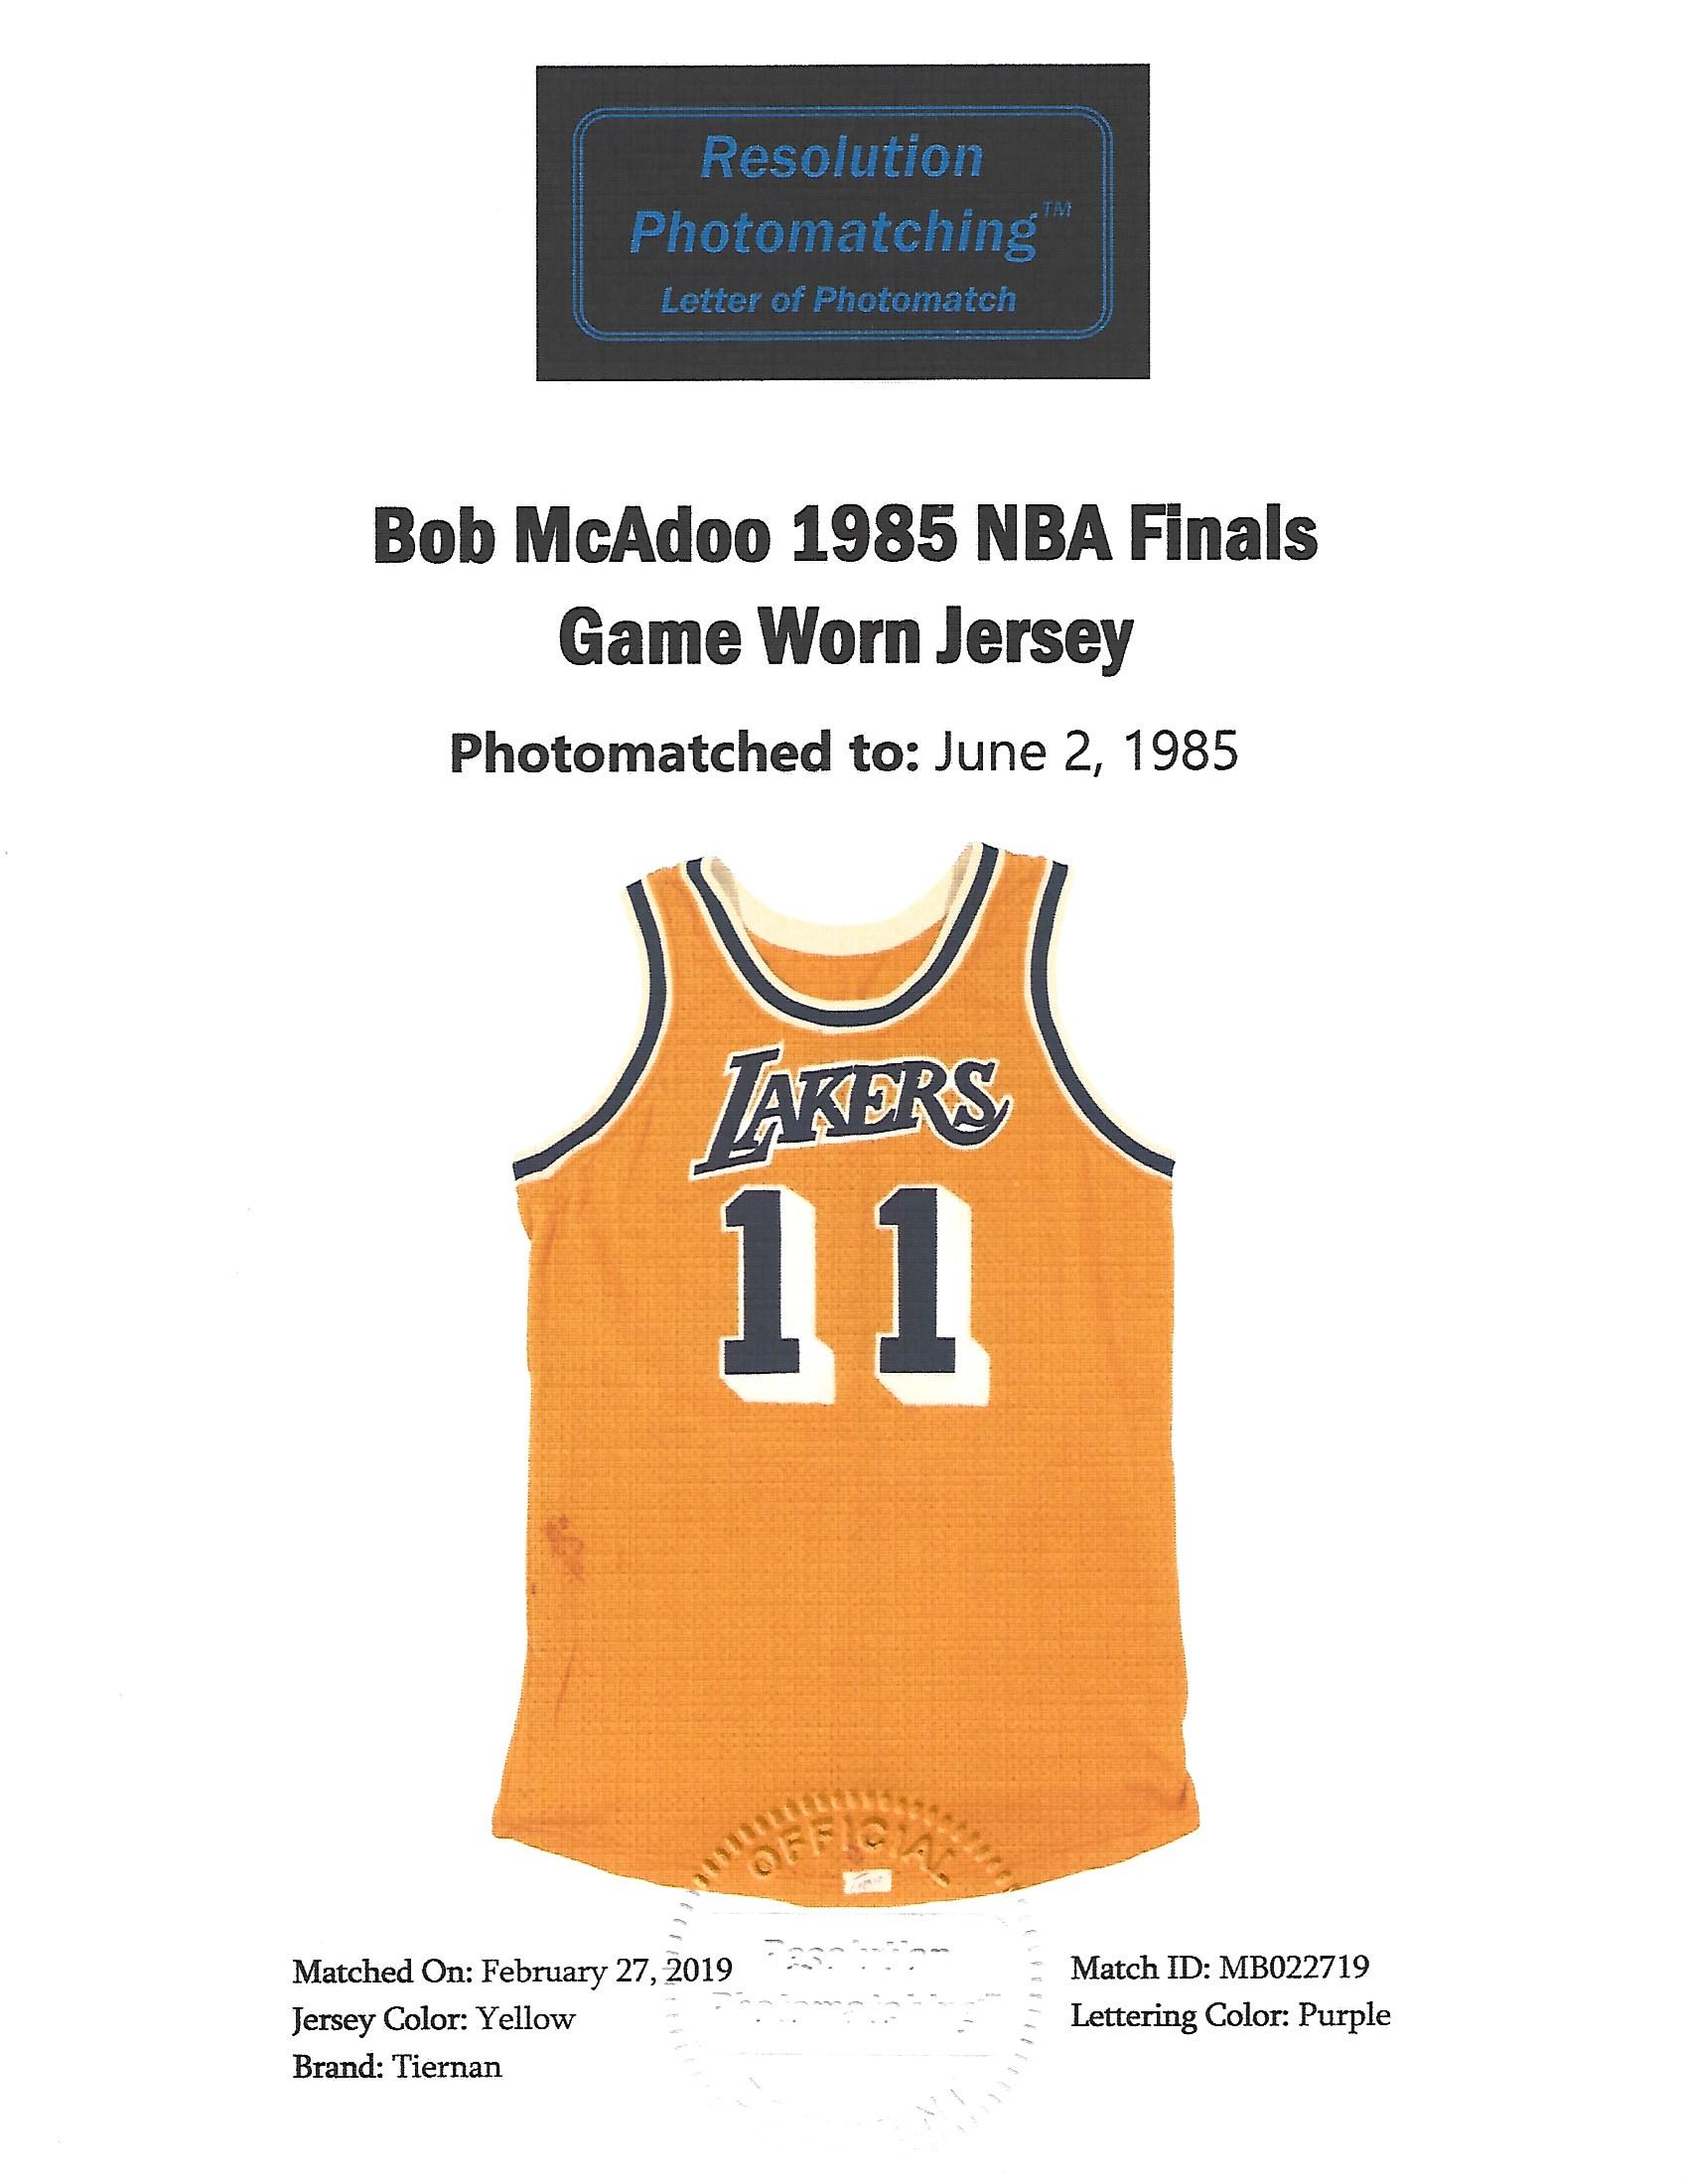 VU and NBA legend Bob McAdoo receives NJCAA's highest honor